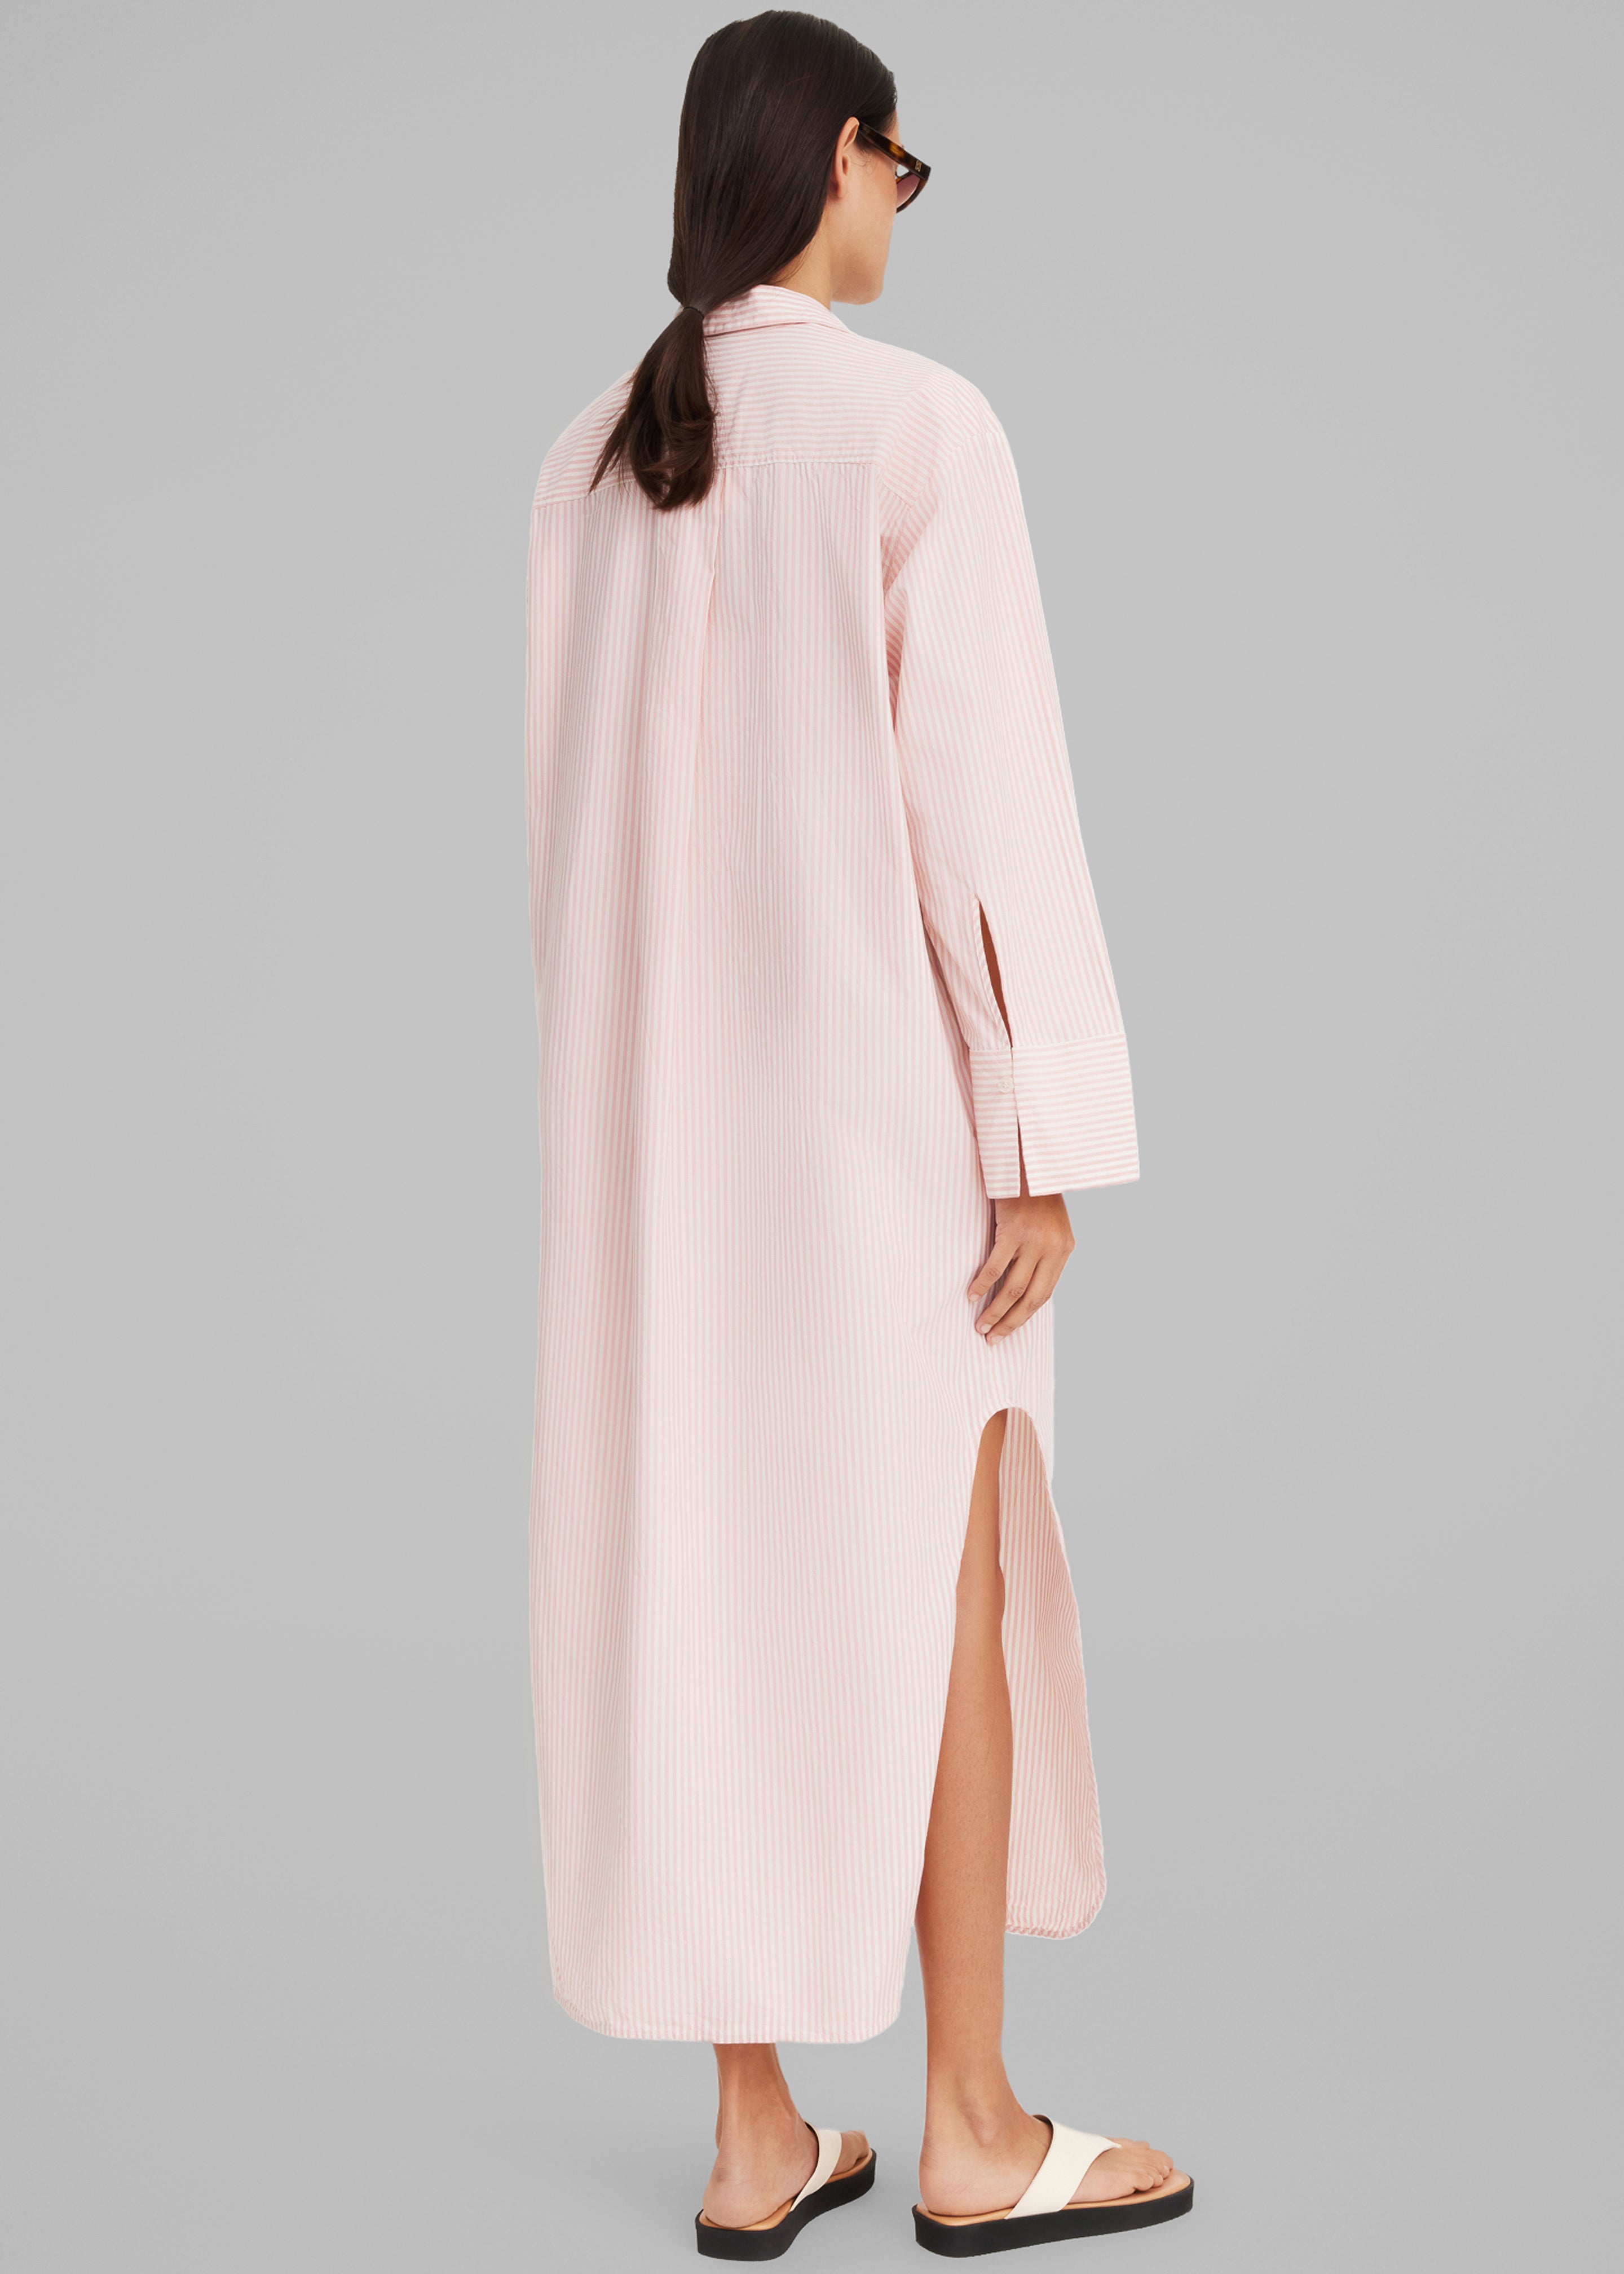 By Malene Birger Perros Dress - Pink Stripe - 3